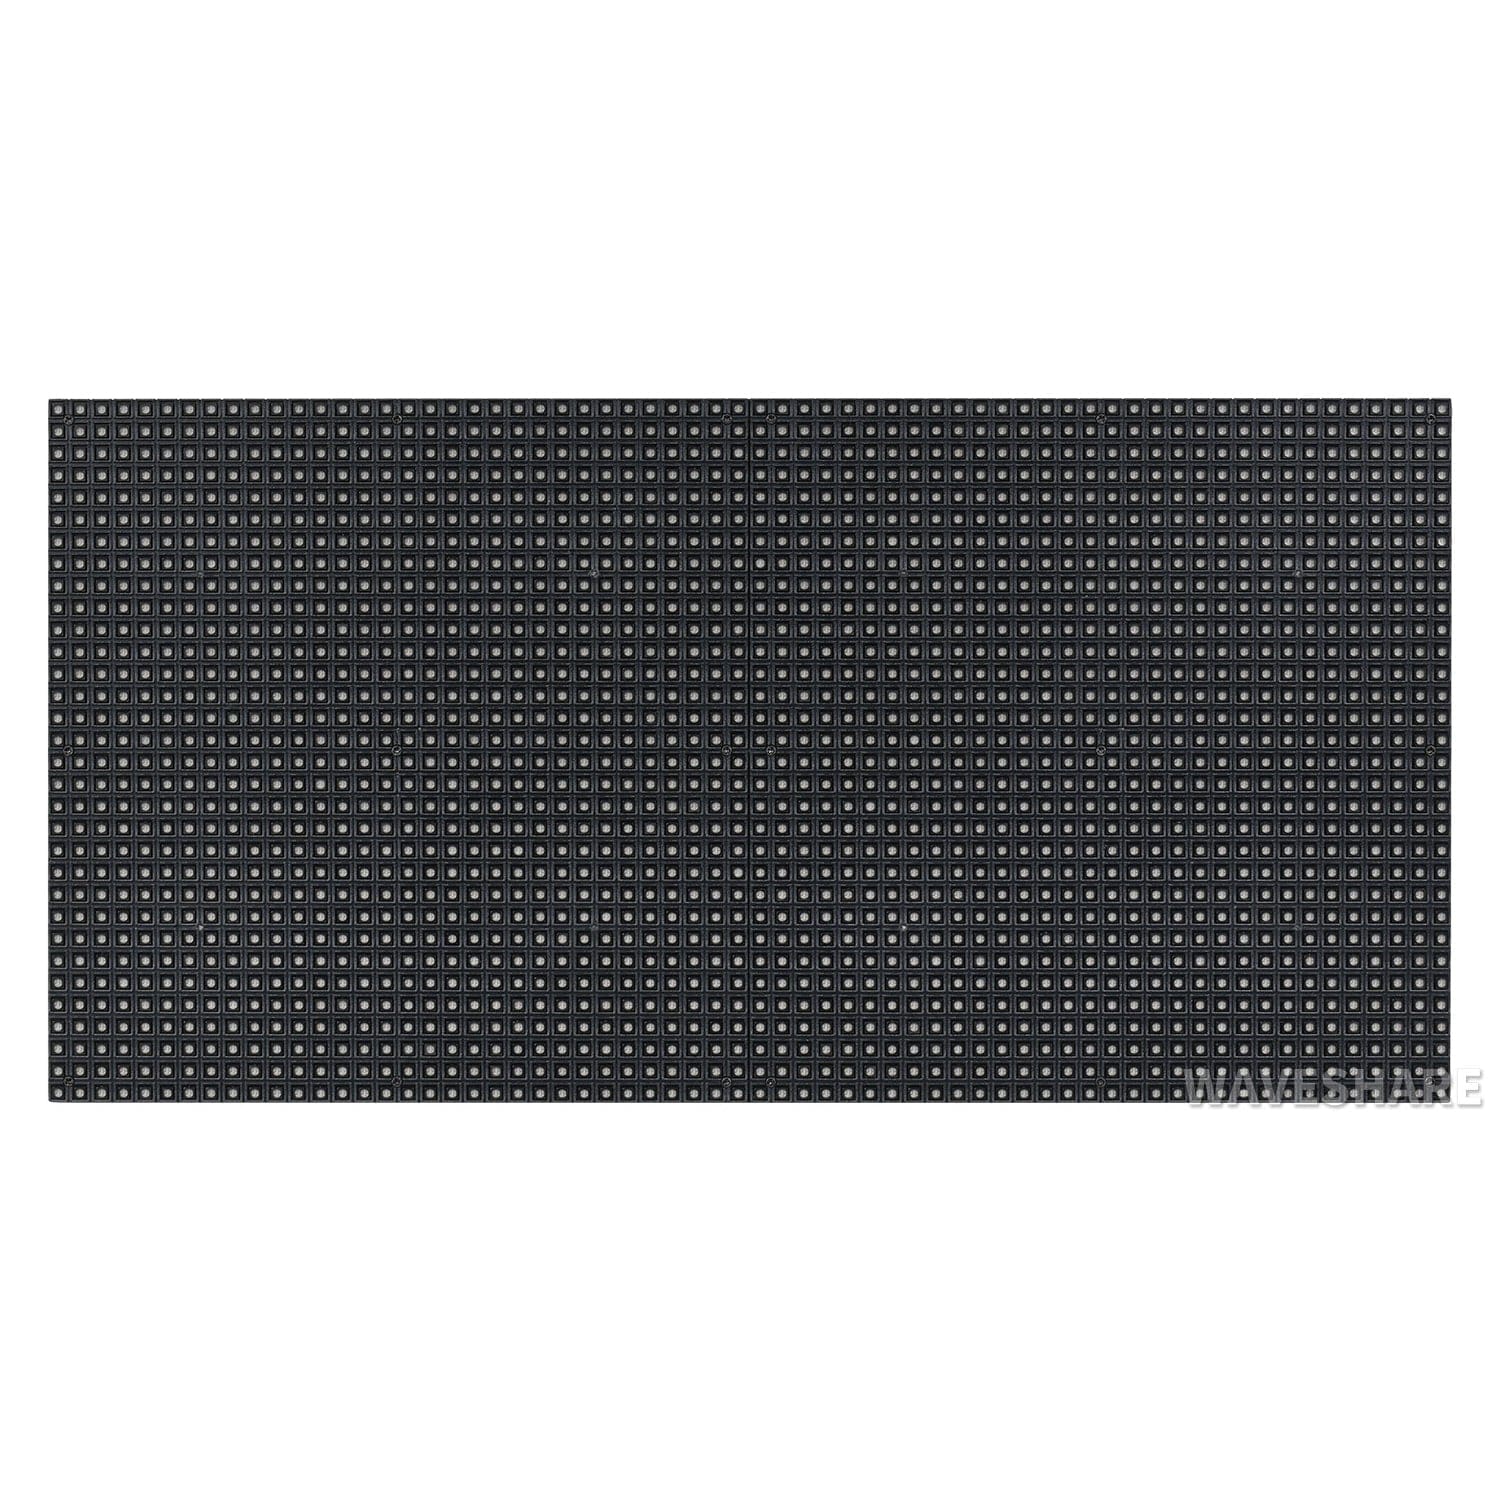 RGB Full-Colour LED Matrix Panel - 4mm Pitch, 64×32 Pixels - The Pi Hut